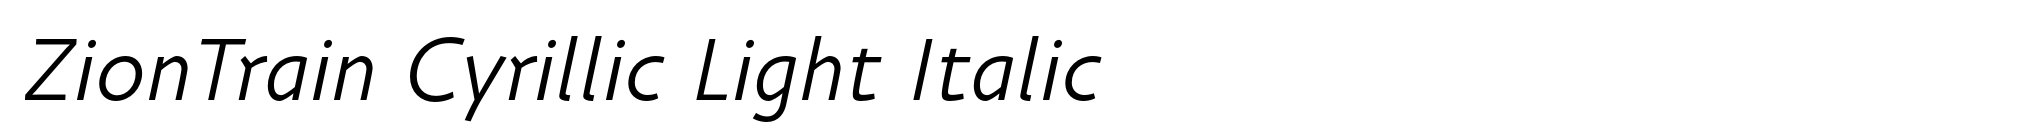 ZionTrain Cyrillic Light Italic image